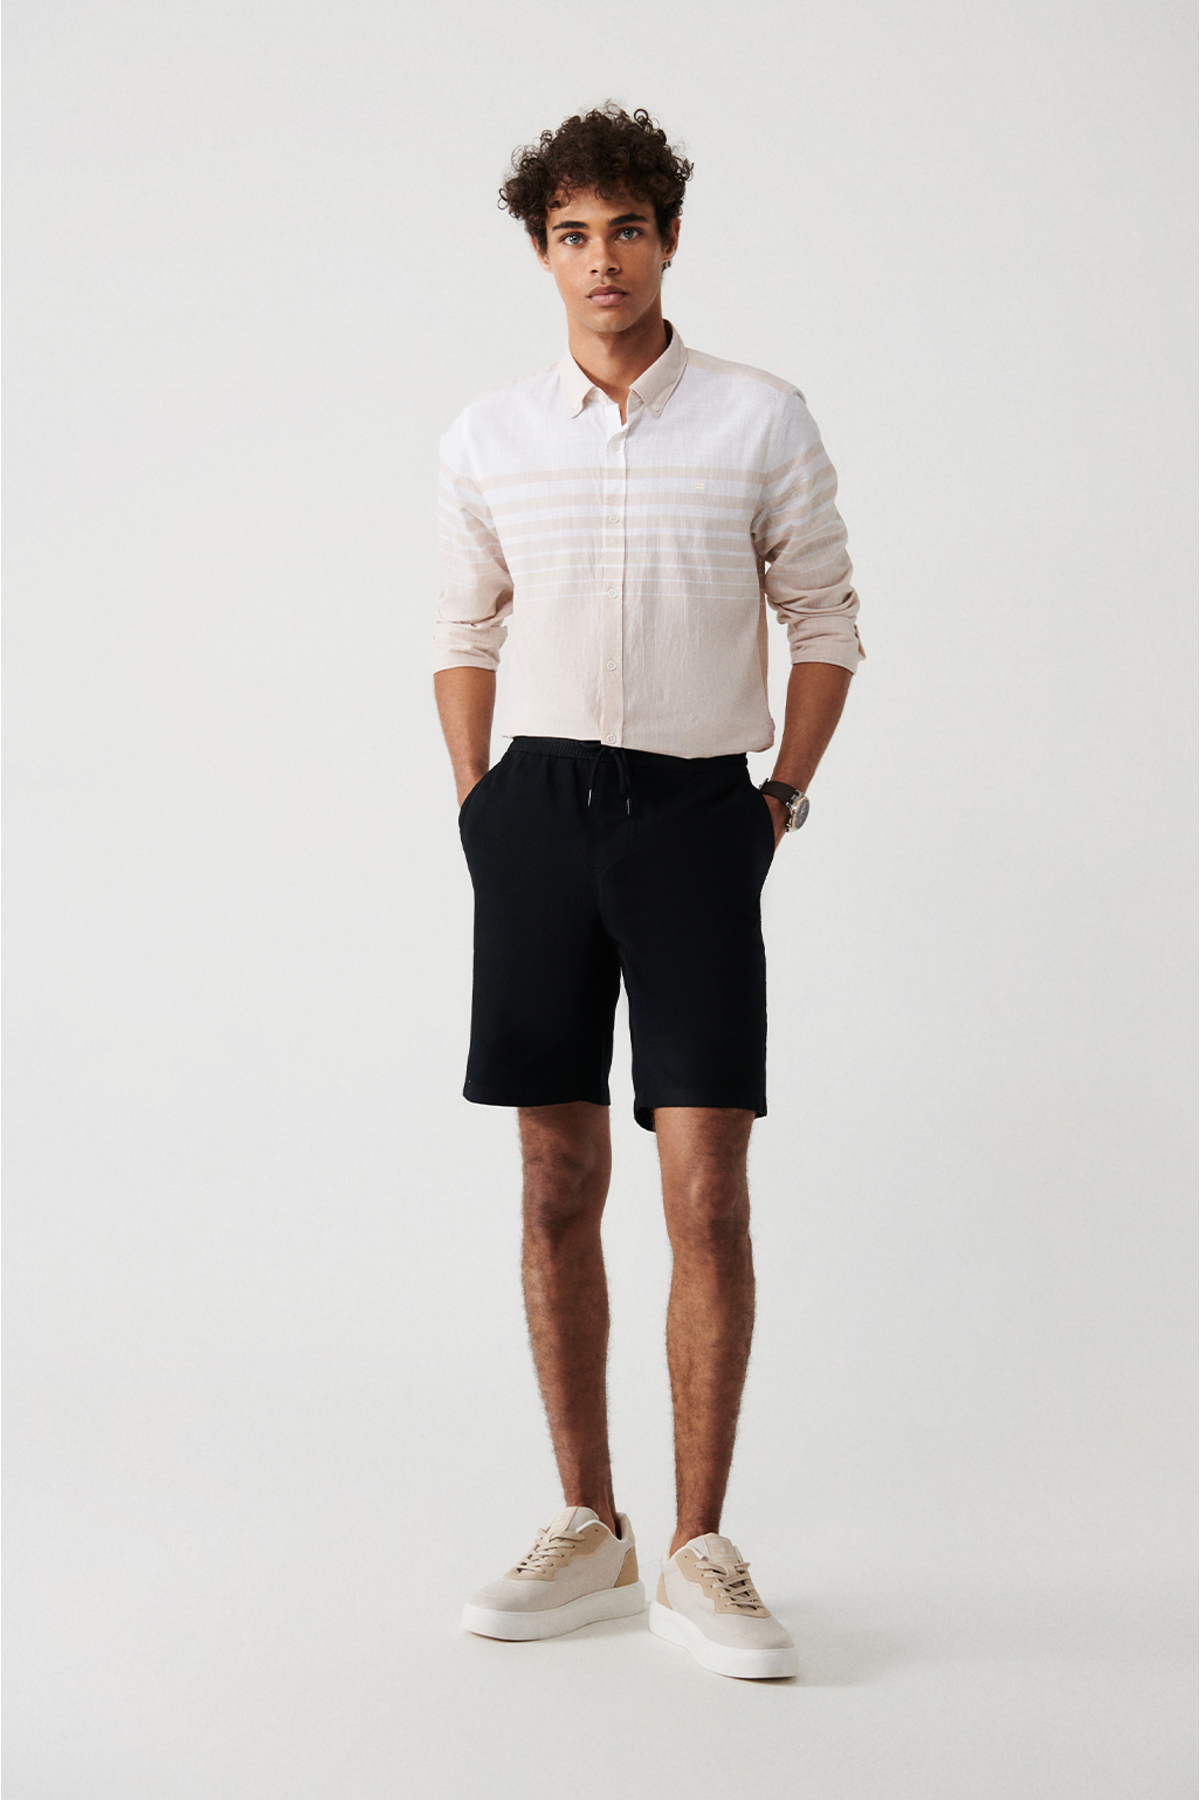 Avva Men's Black 100% Cotton Side Pocket Elastic Waist Linen Textured Relaxed Fit Comfortable Cut Shorts